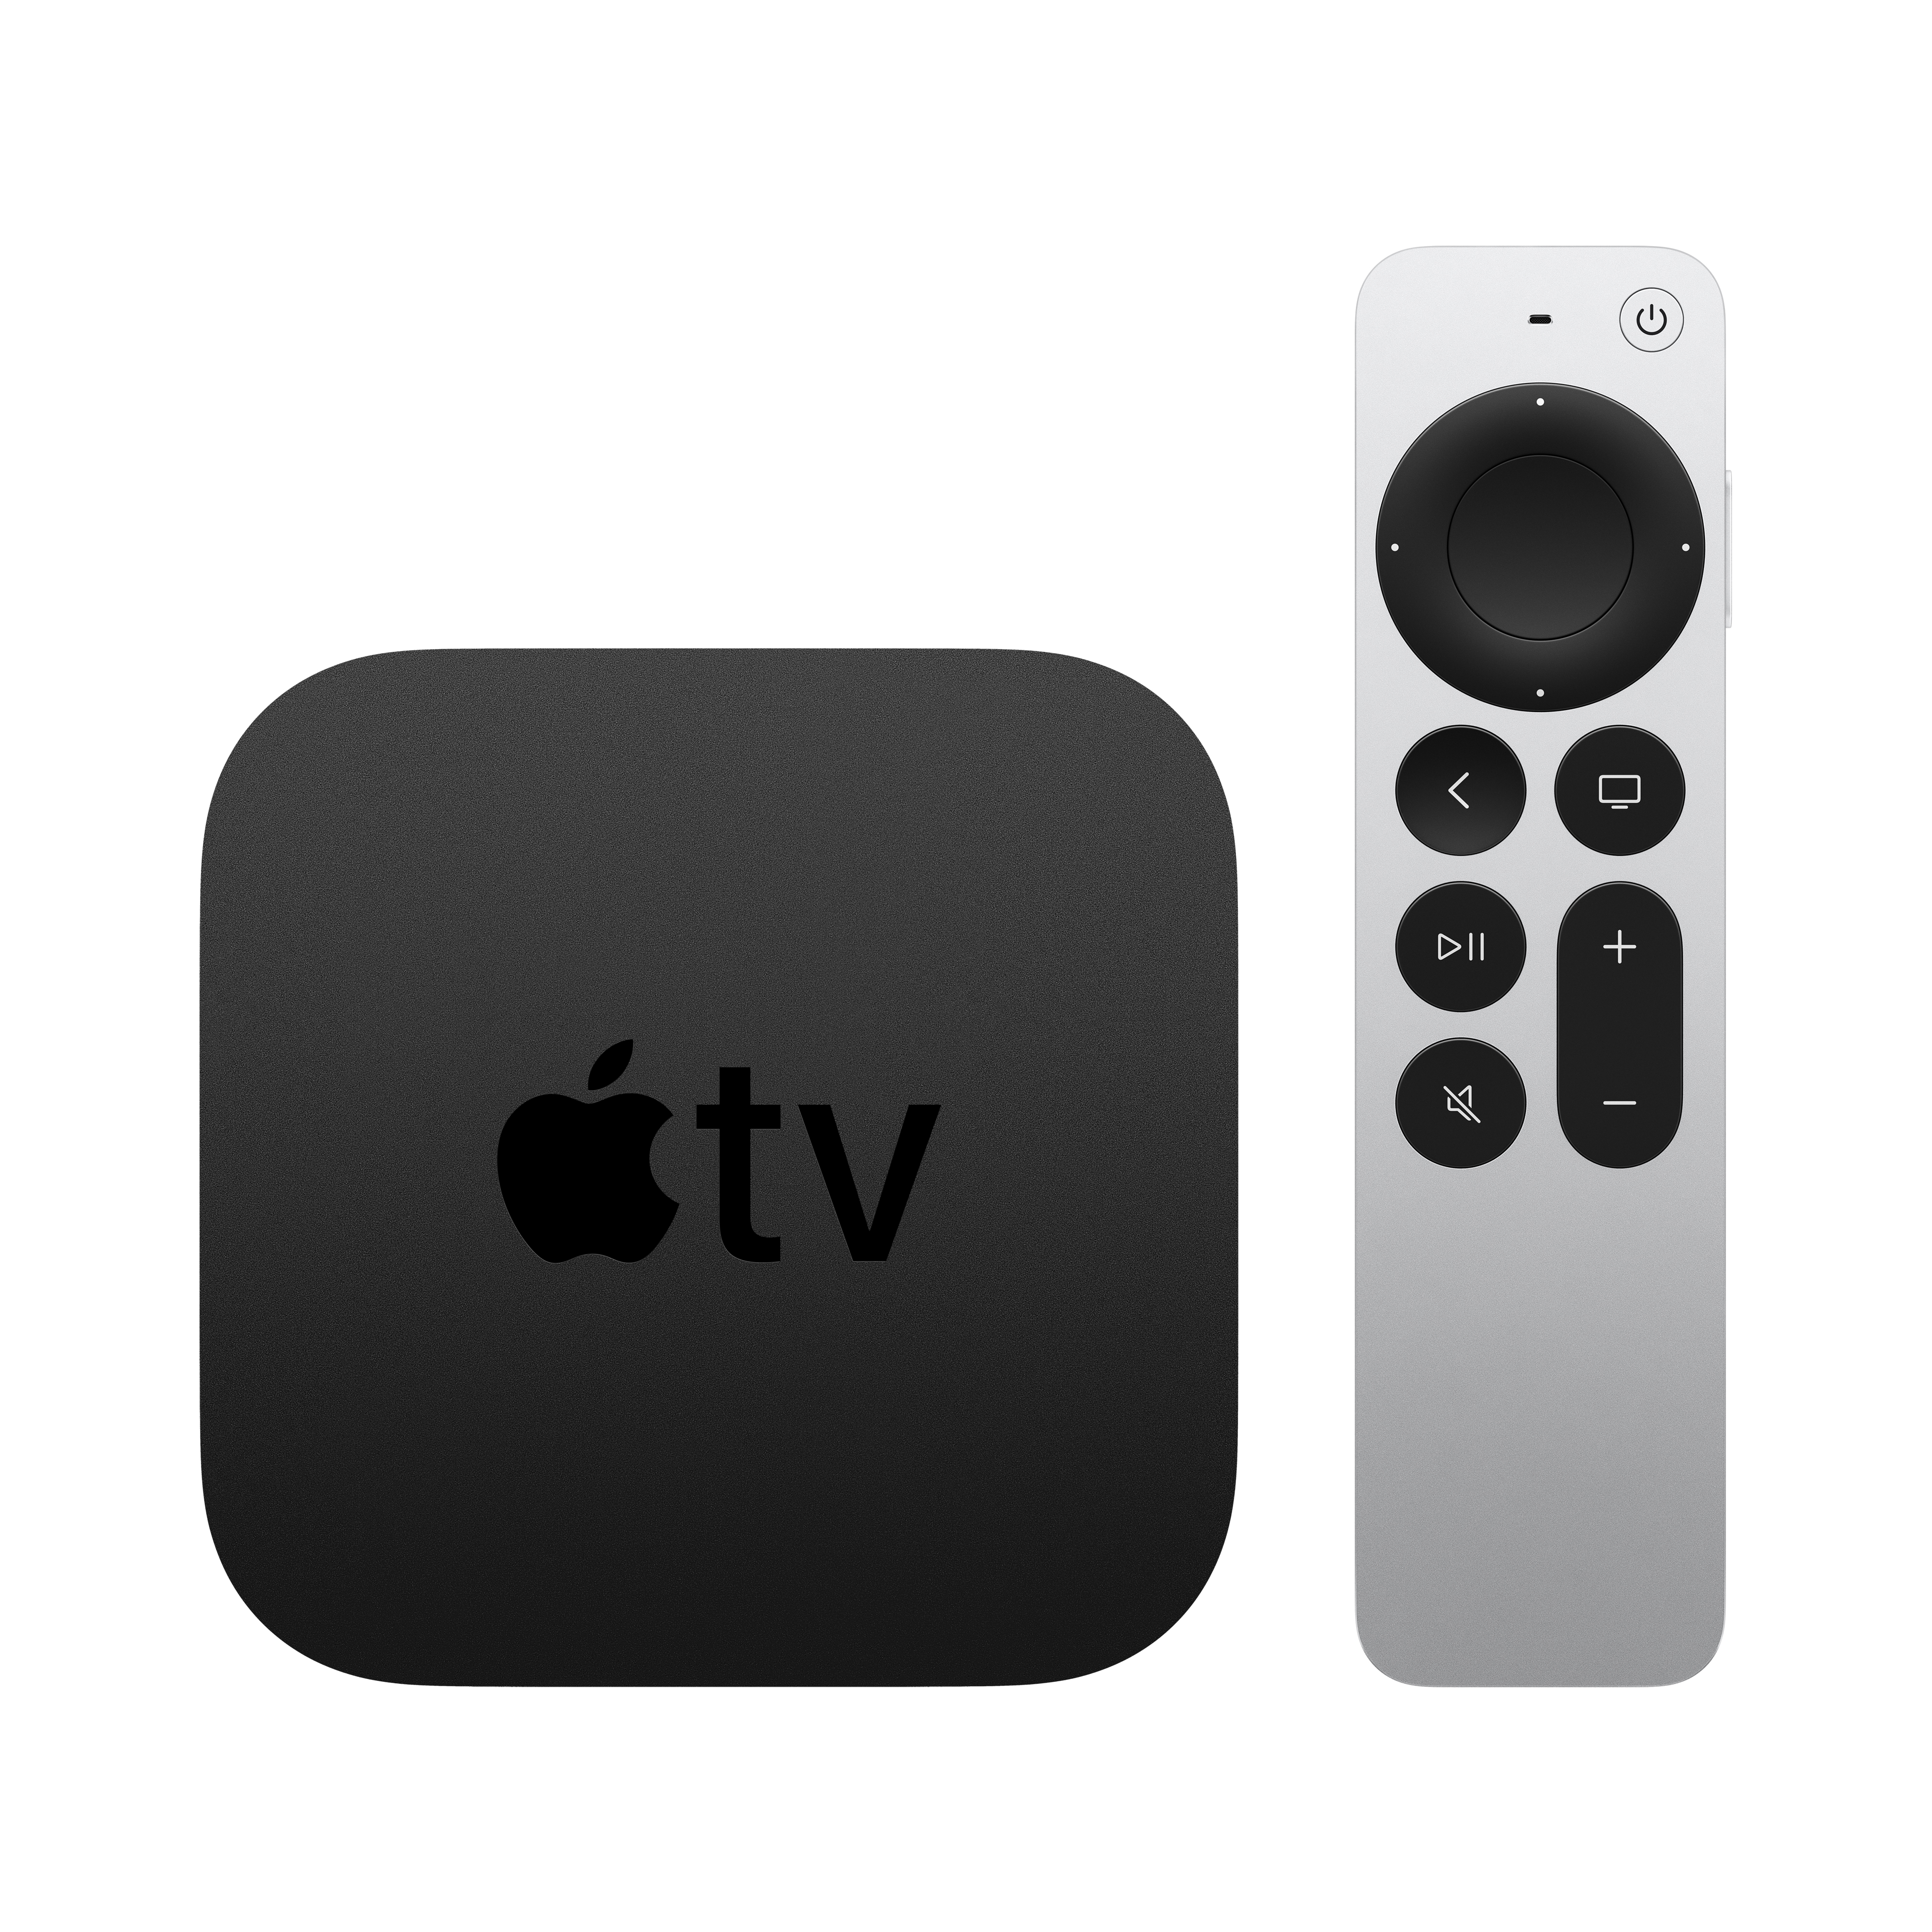 Apple TV 4K Internet TV, 32 GB HDD, Wireless LAN (2nd Generation) - image 1 of 5